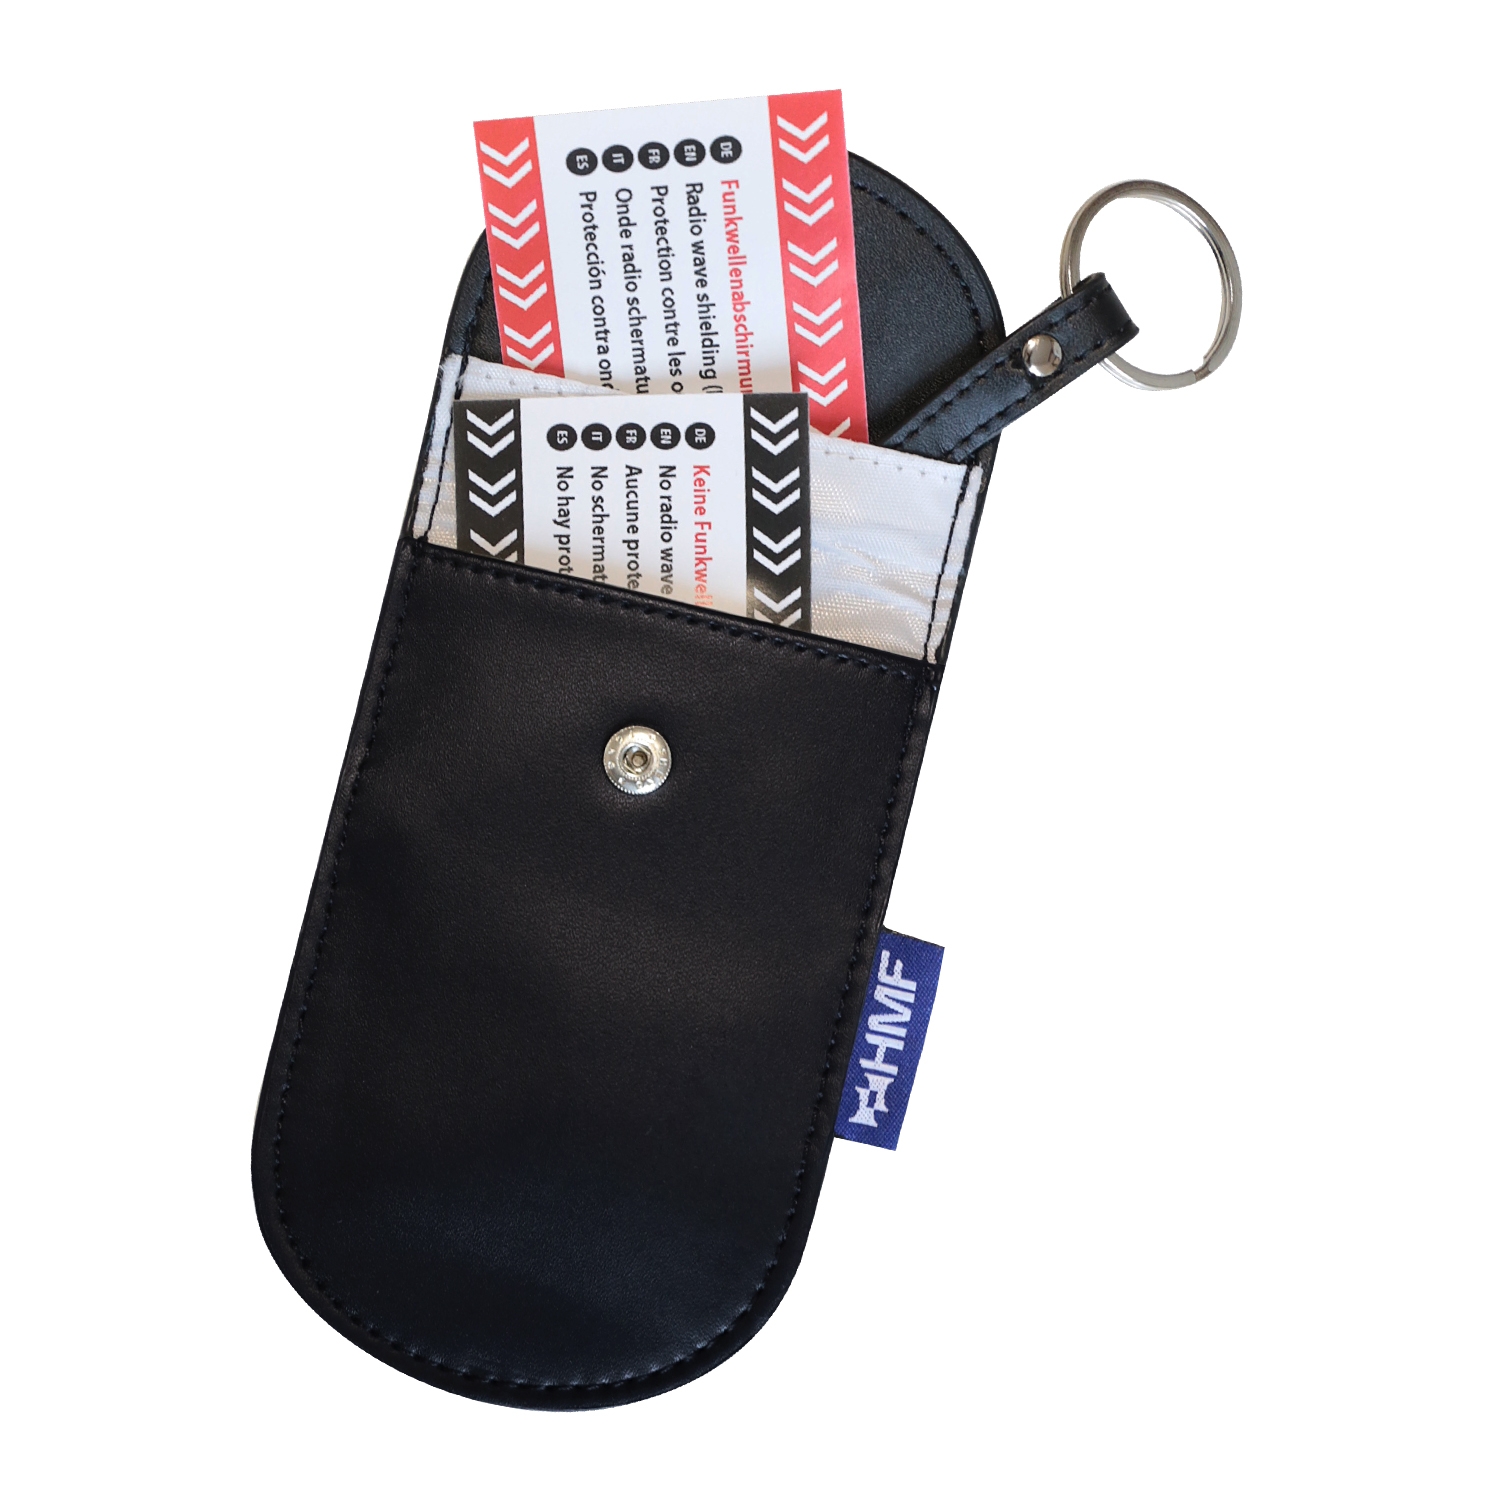 Keyless Go Schutz Autoschlüssel, 2 Stück RFID